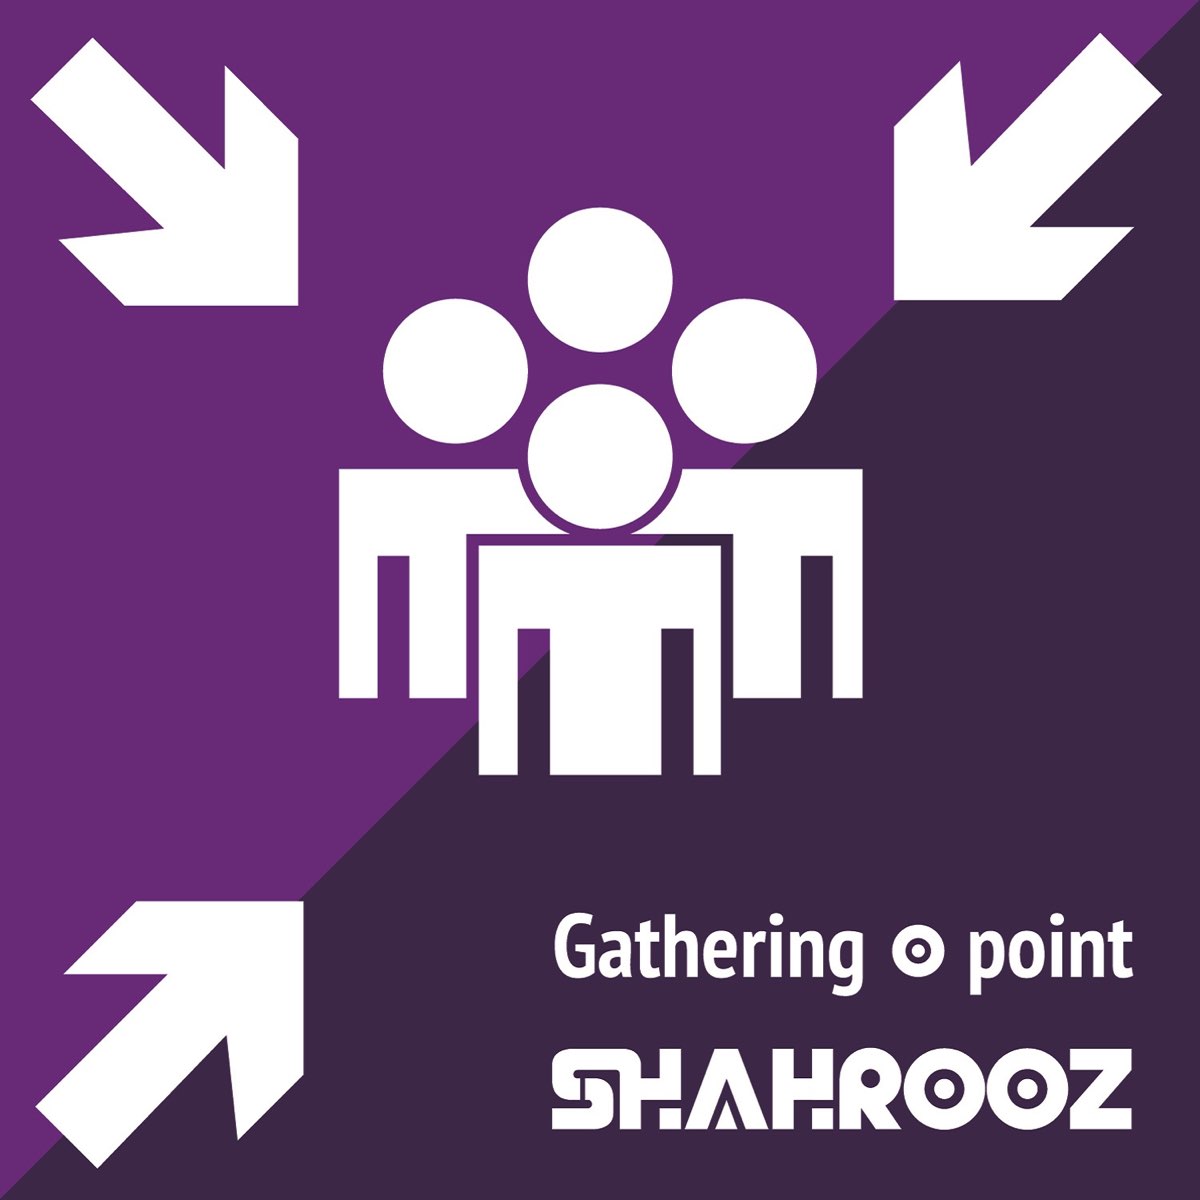 The Gathering альбомы. Gathering point sign. Arsh Shahrooz Zomorodi Associates. Детской поинты